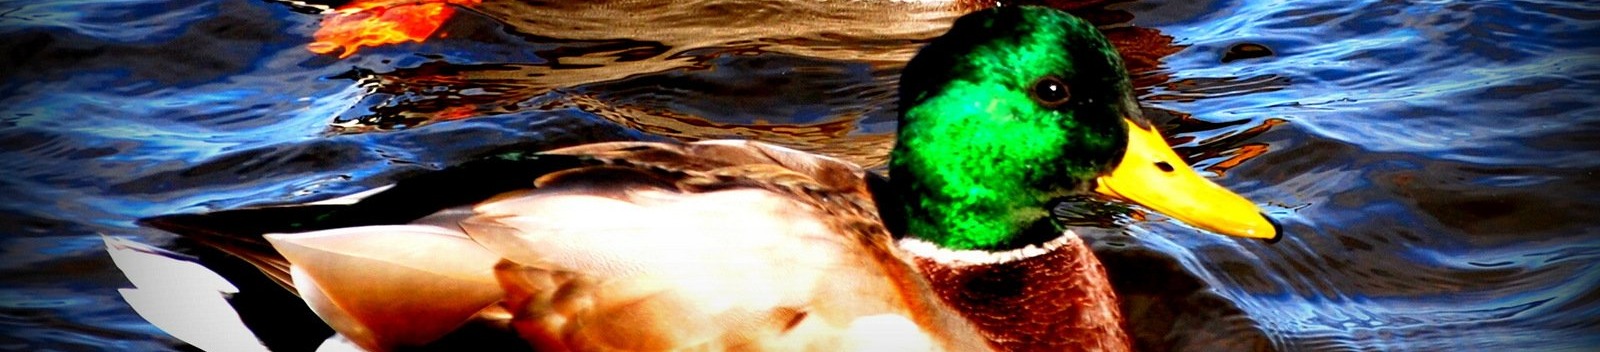 Duck Swimming